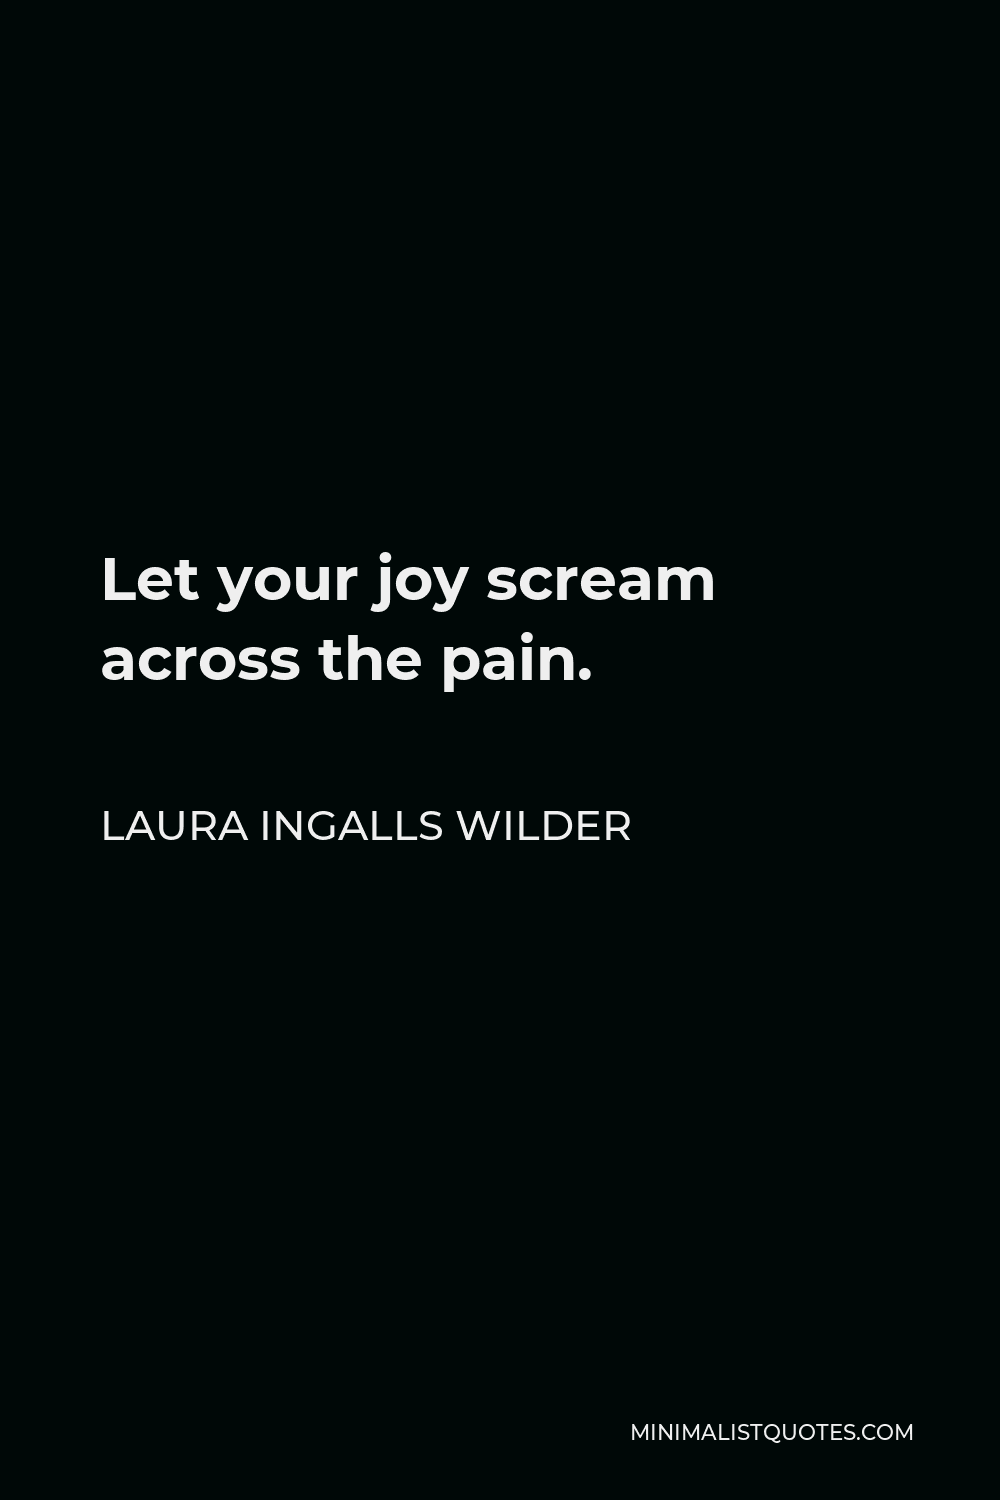 Laura Ingalls Wilder Quote - Let your joy scream across the pain.